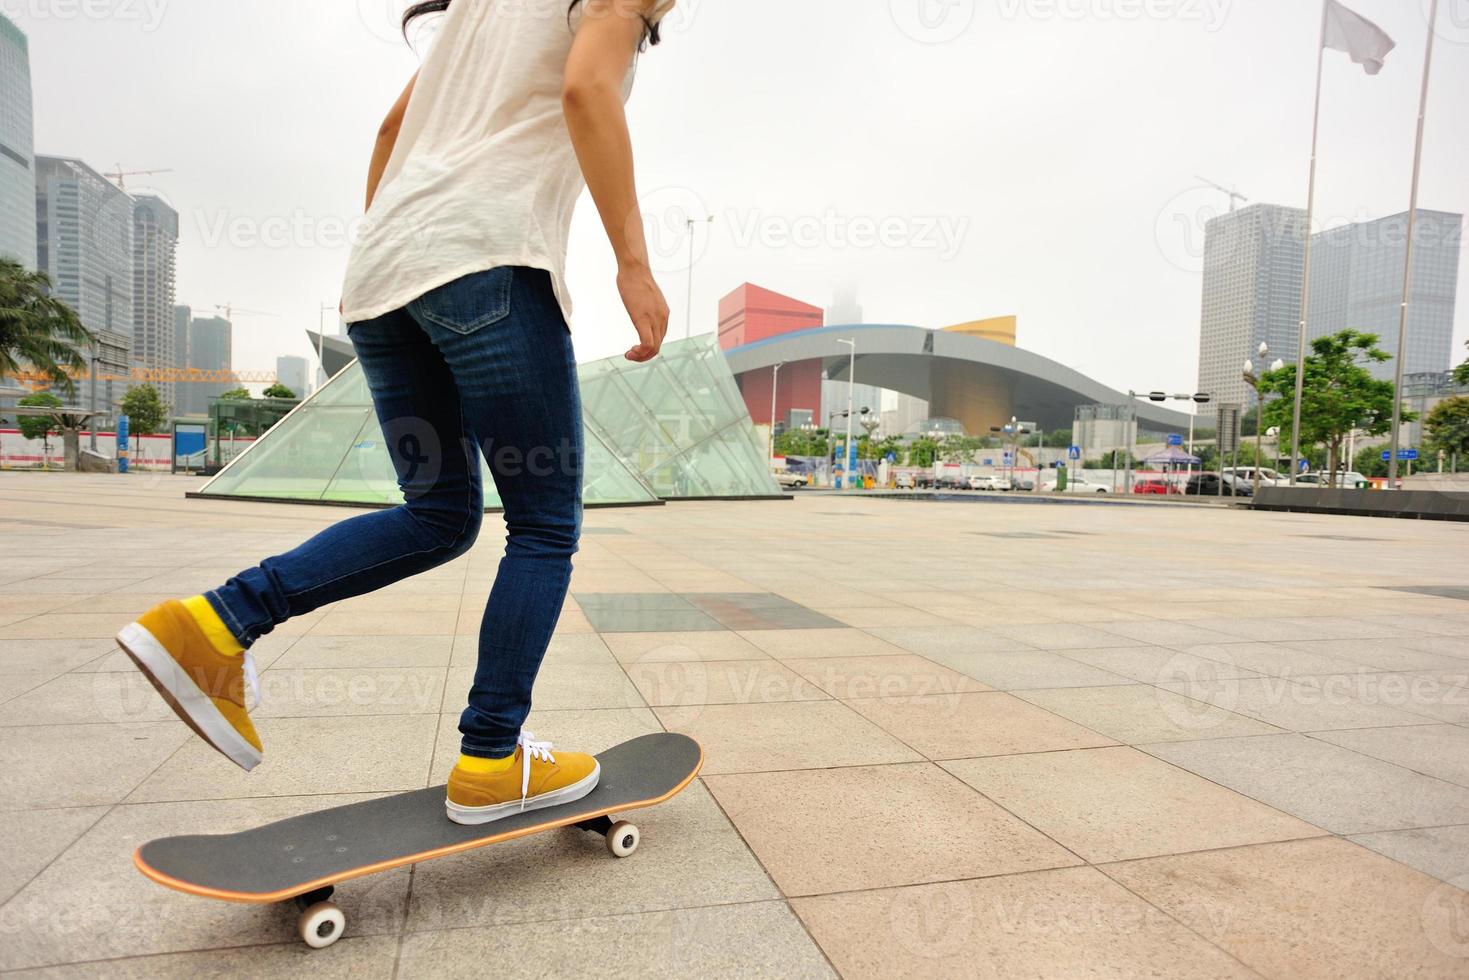 speeding skateboarding woman photo